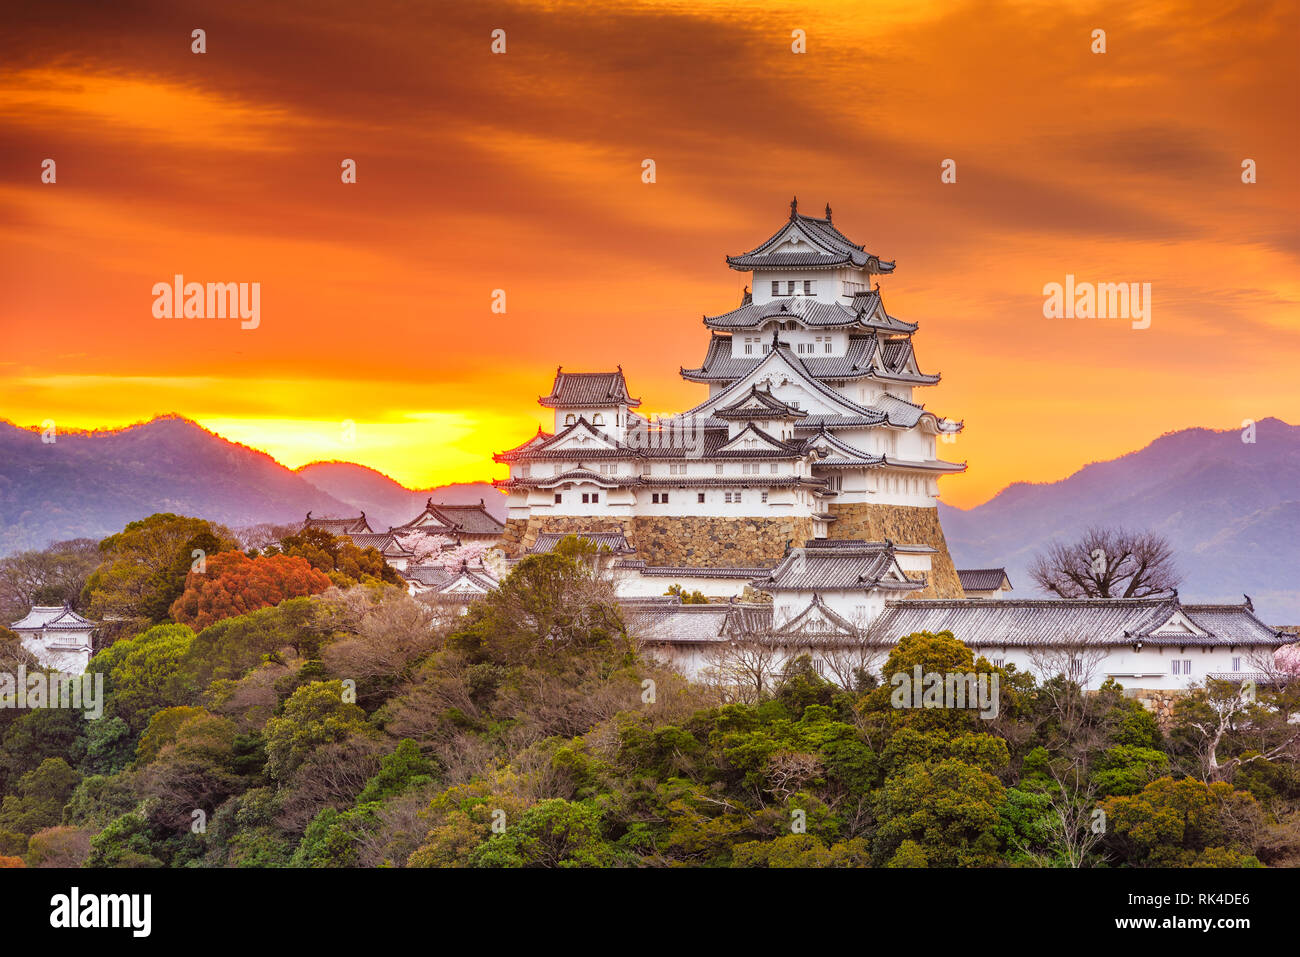 Himeji, Japan landscape with Himeji Castle at dawn. Stock Photo